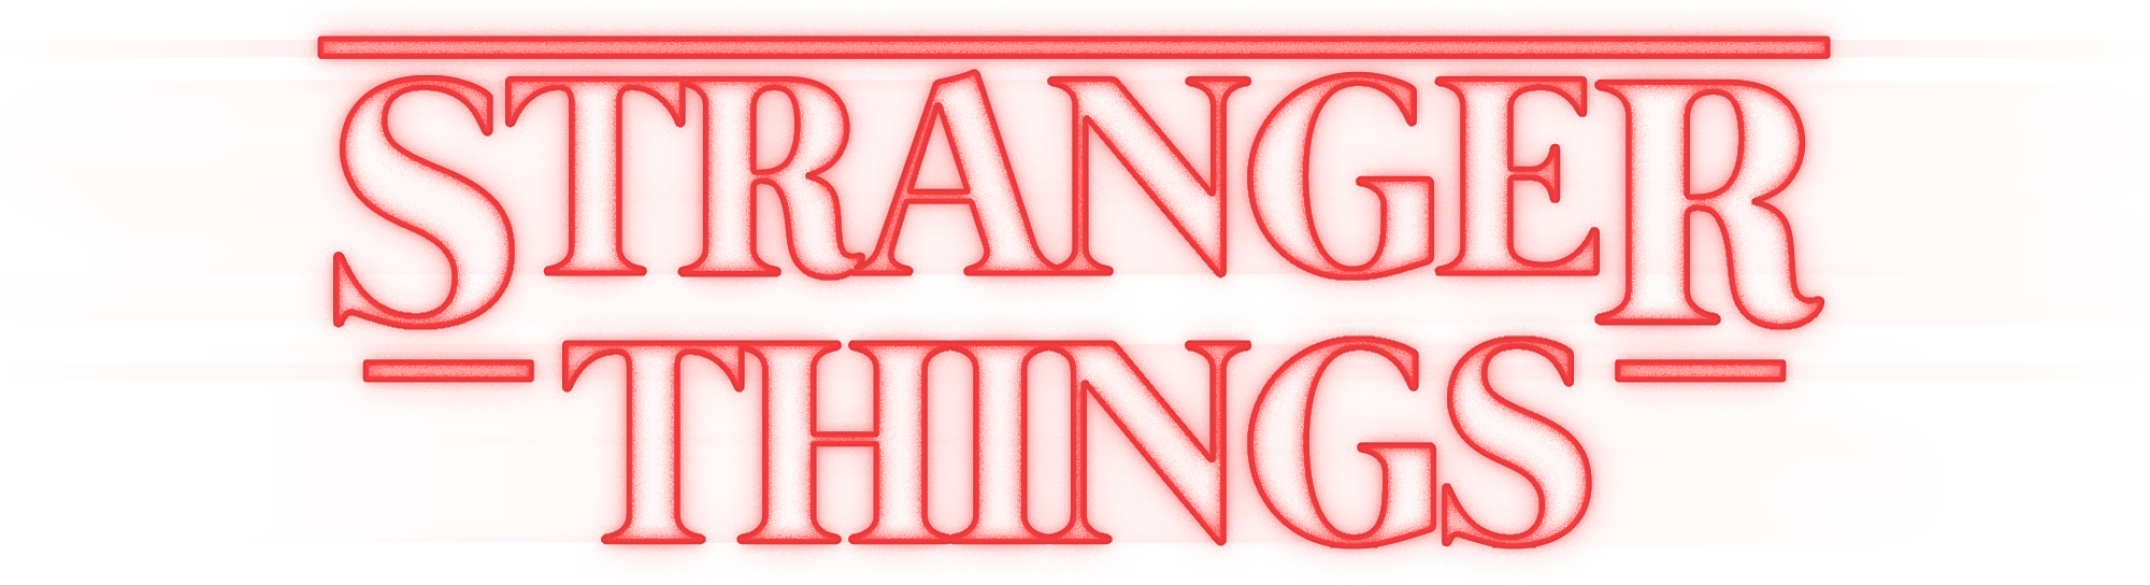 stranger-things-text